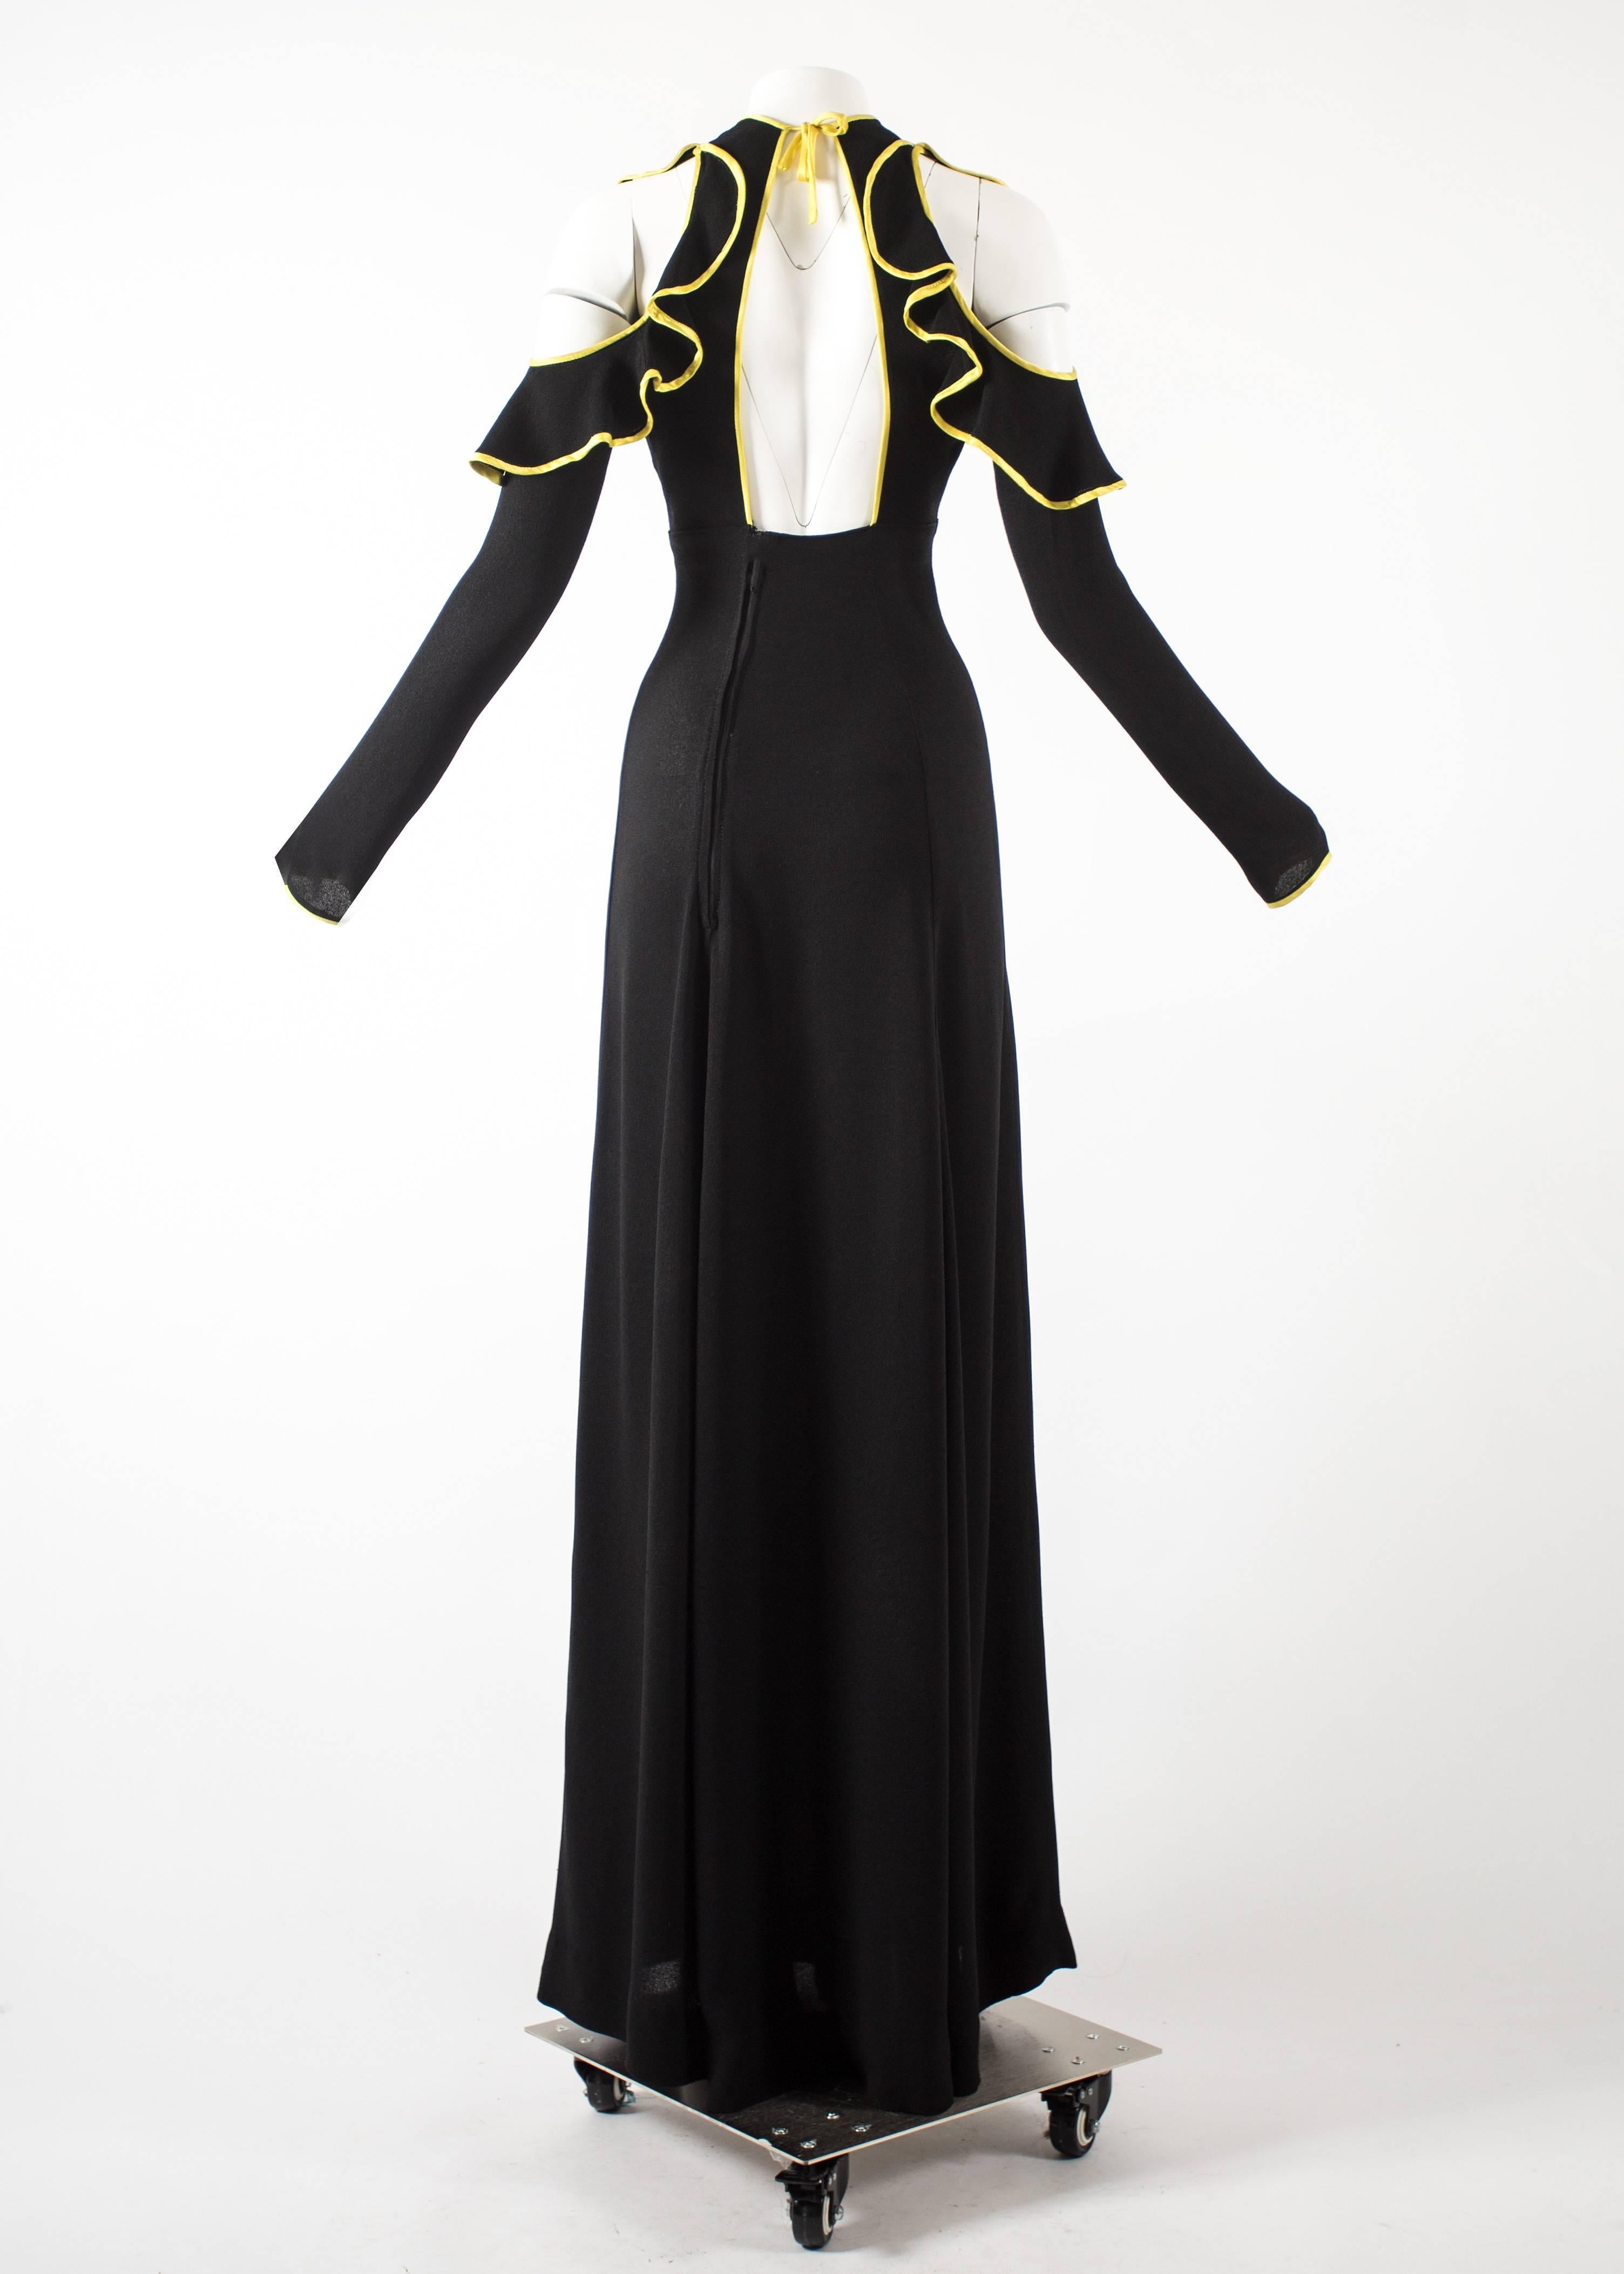 Women's Ossie Clark 1968 black moss crepe evening dress with yellow satin trim